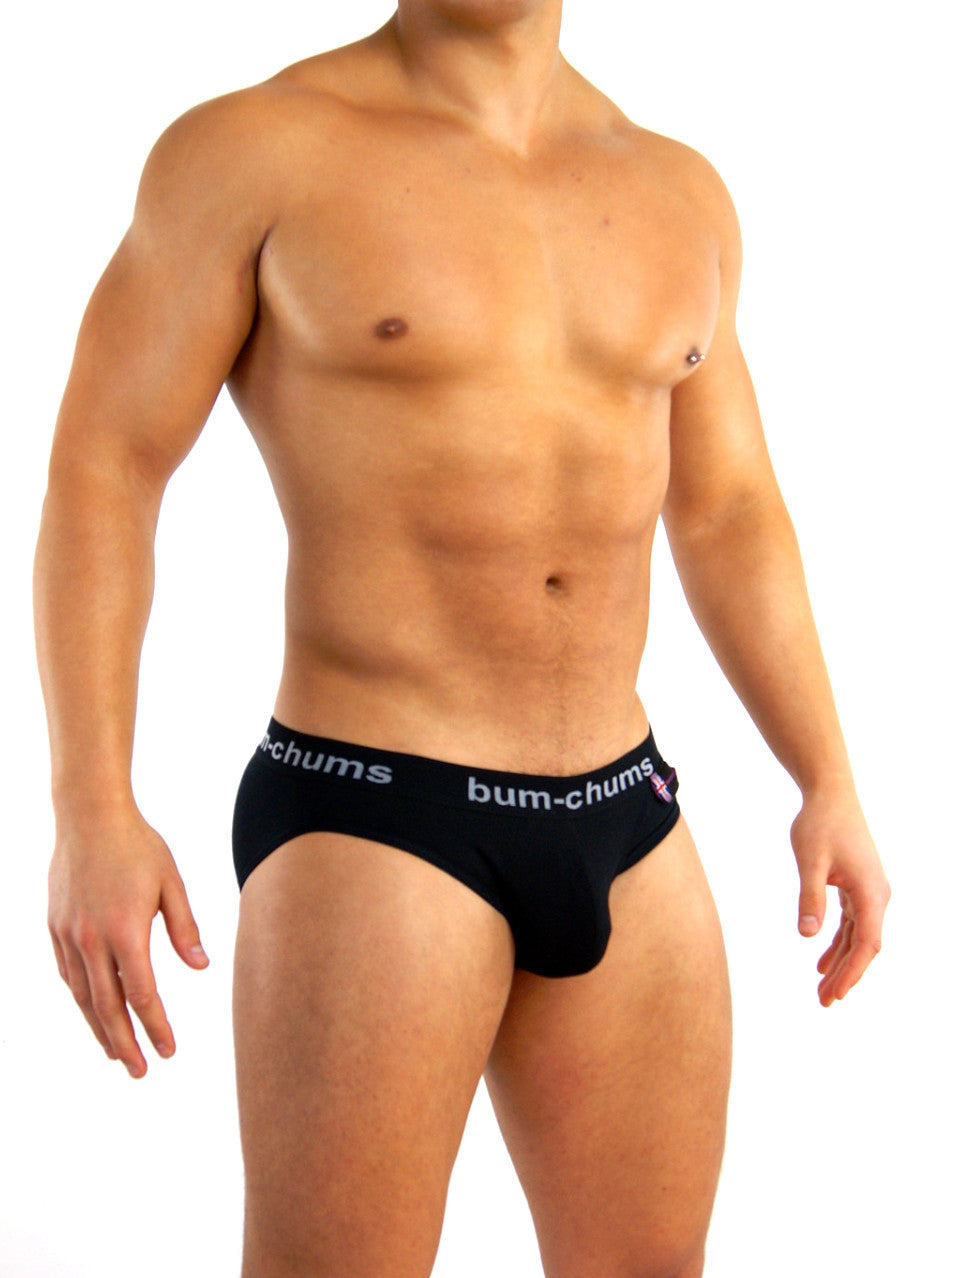 Bum Chums Black Cotton Lycra Men S Brief Underwear Bum Chums British Brand Gay Men S Underwear Made In Uk